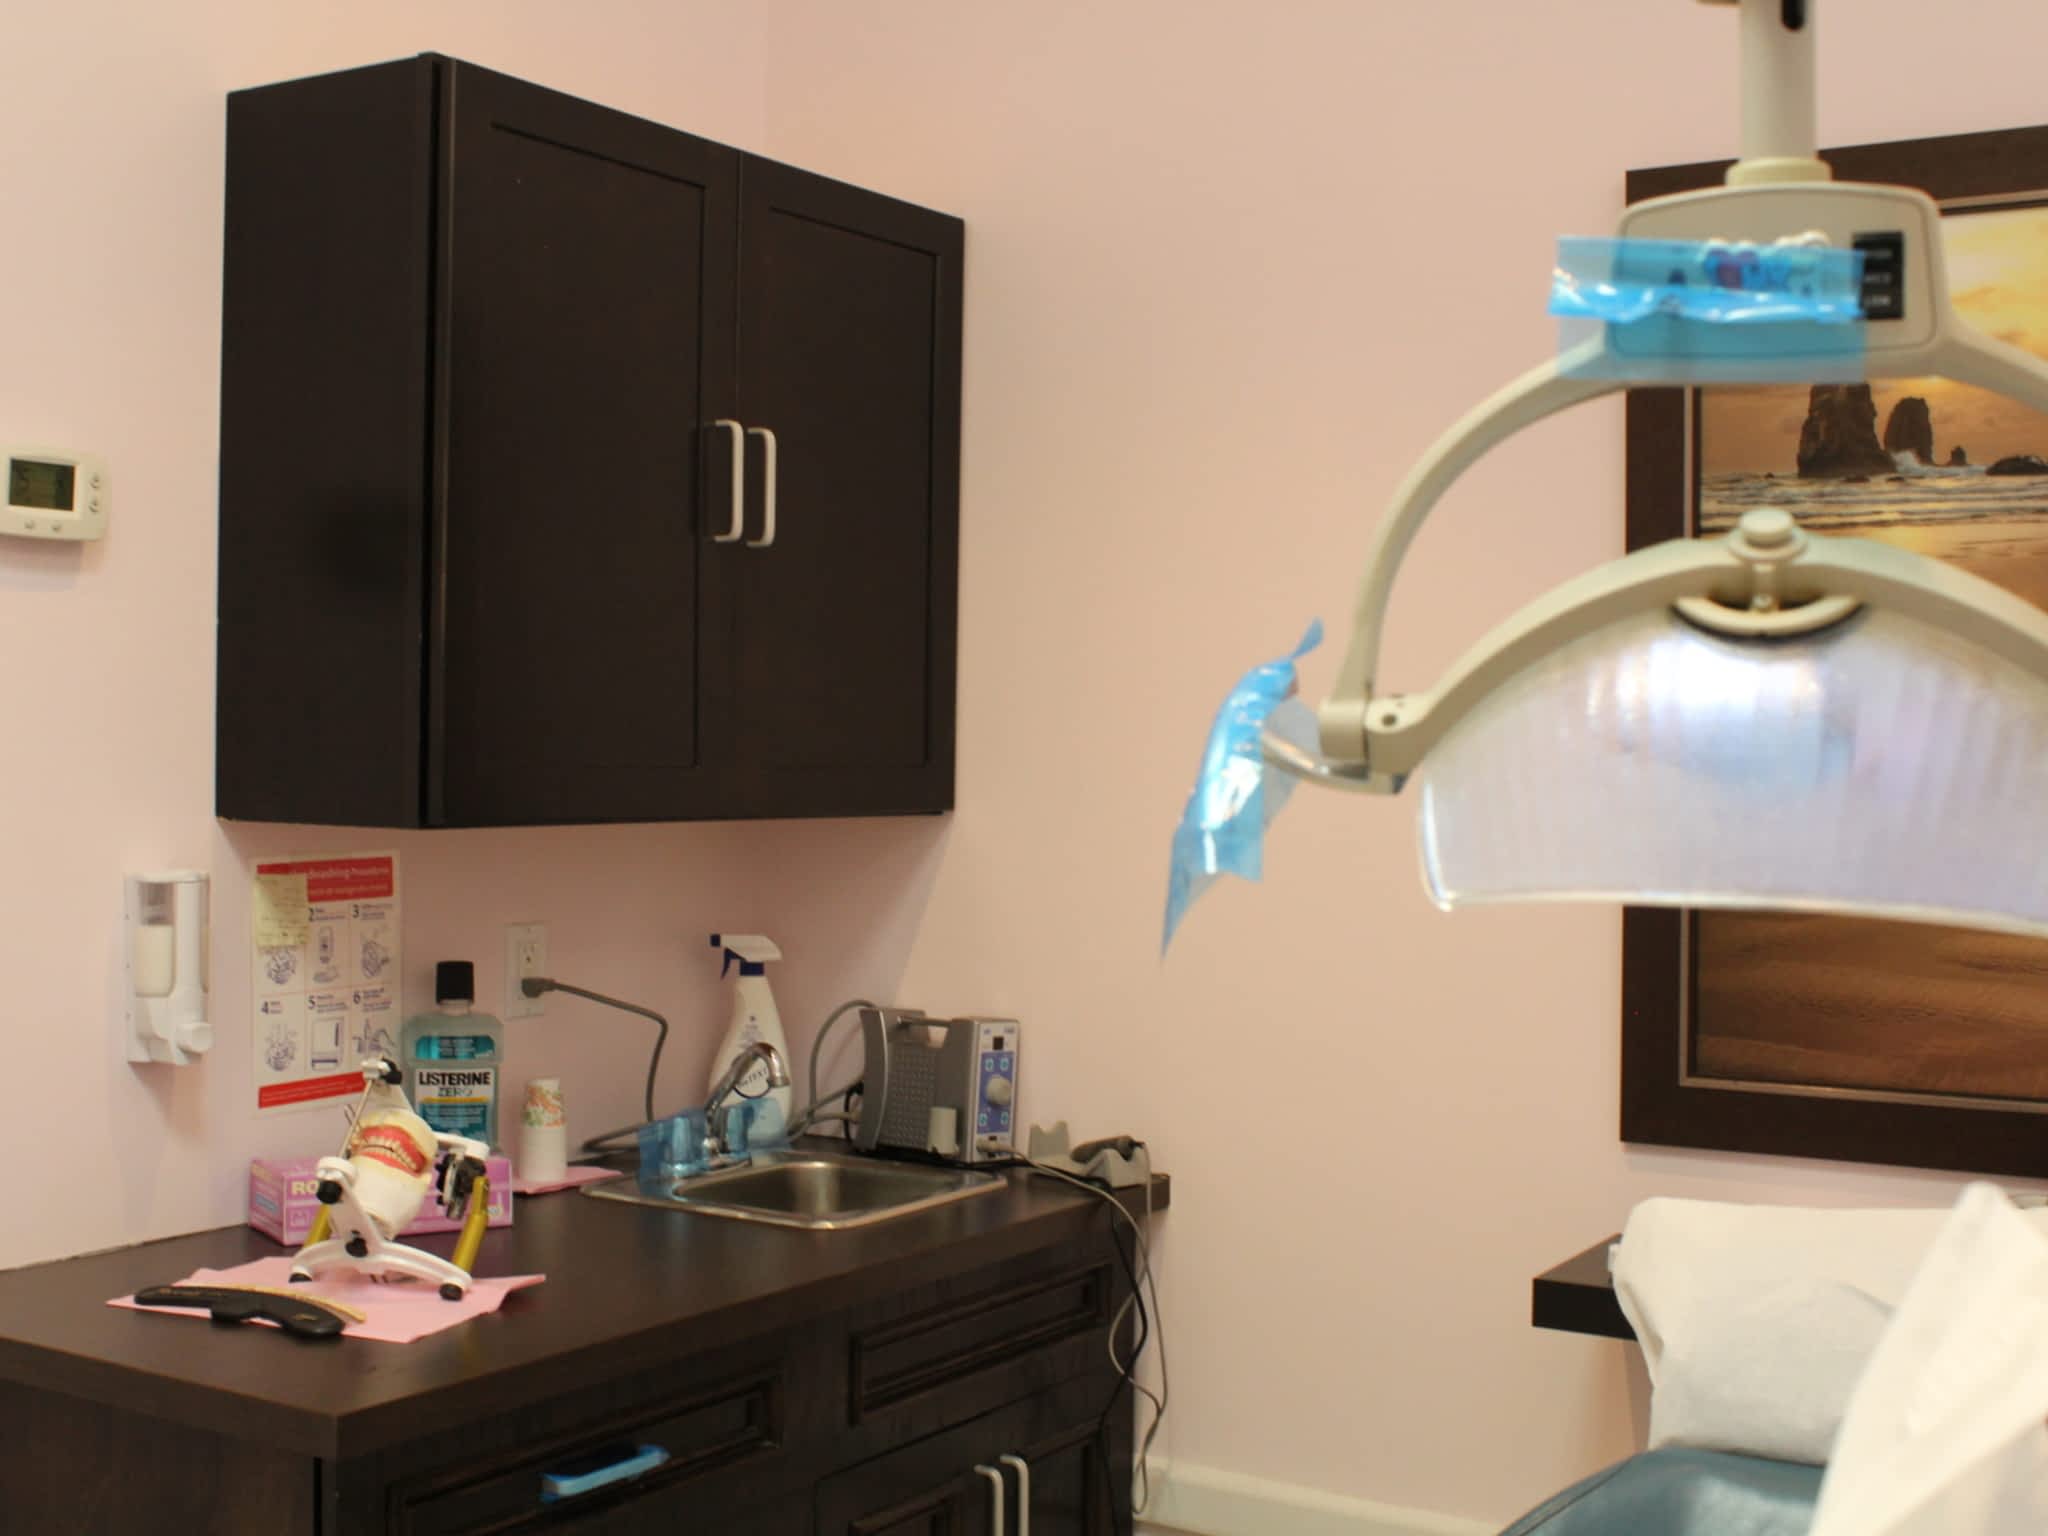 photo Vaughan City Denture Clinic